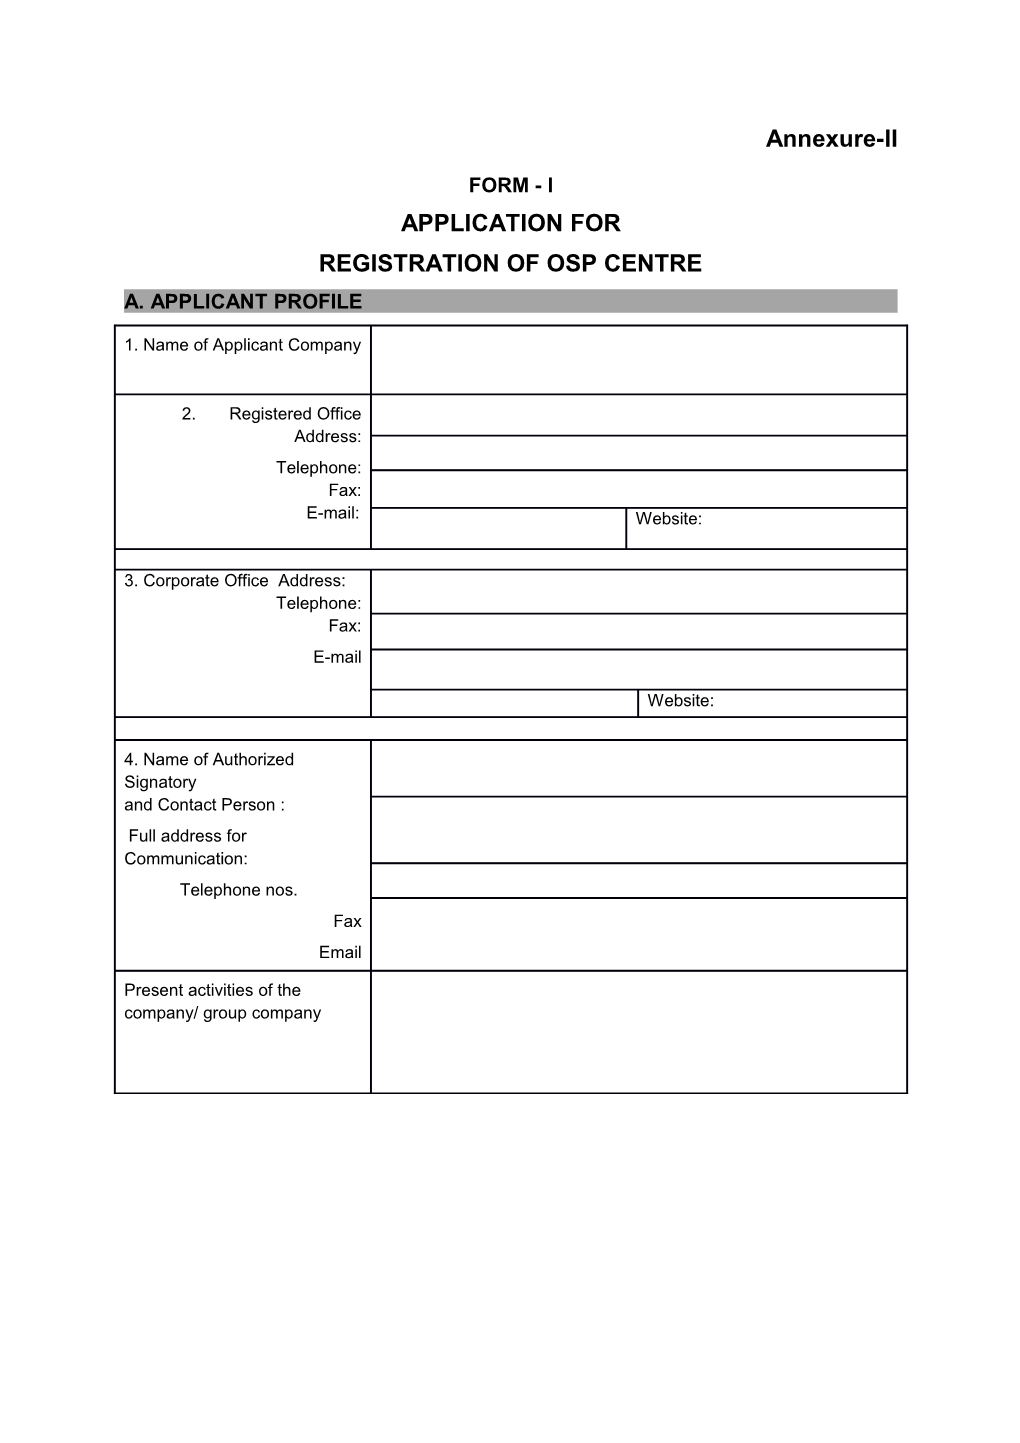 Registration of Osp Centre